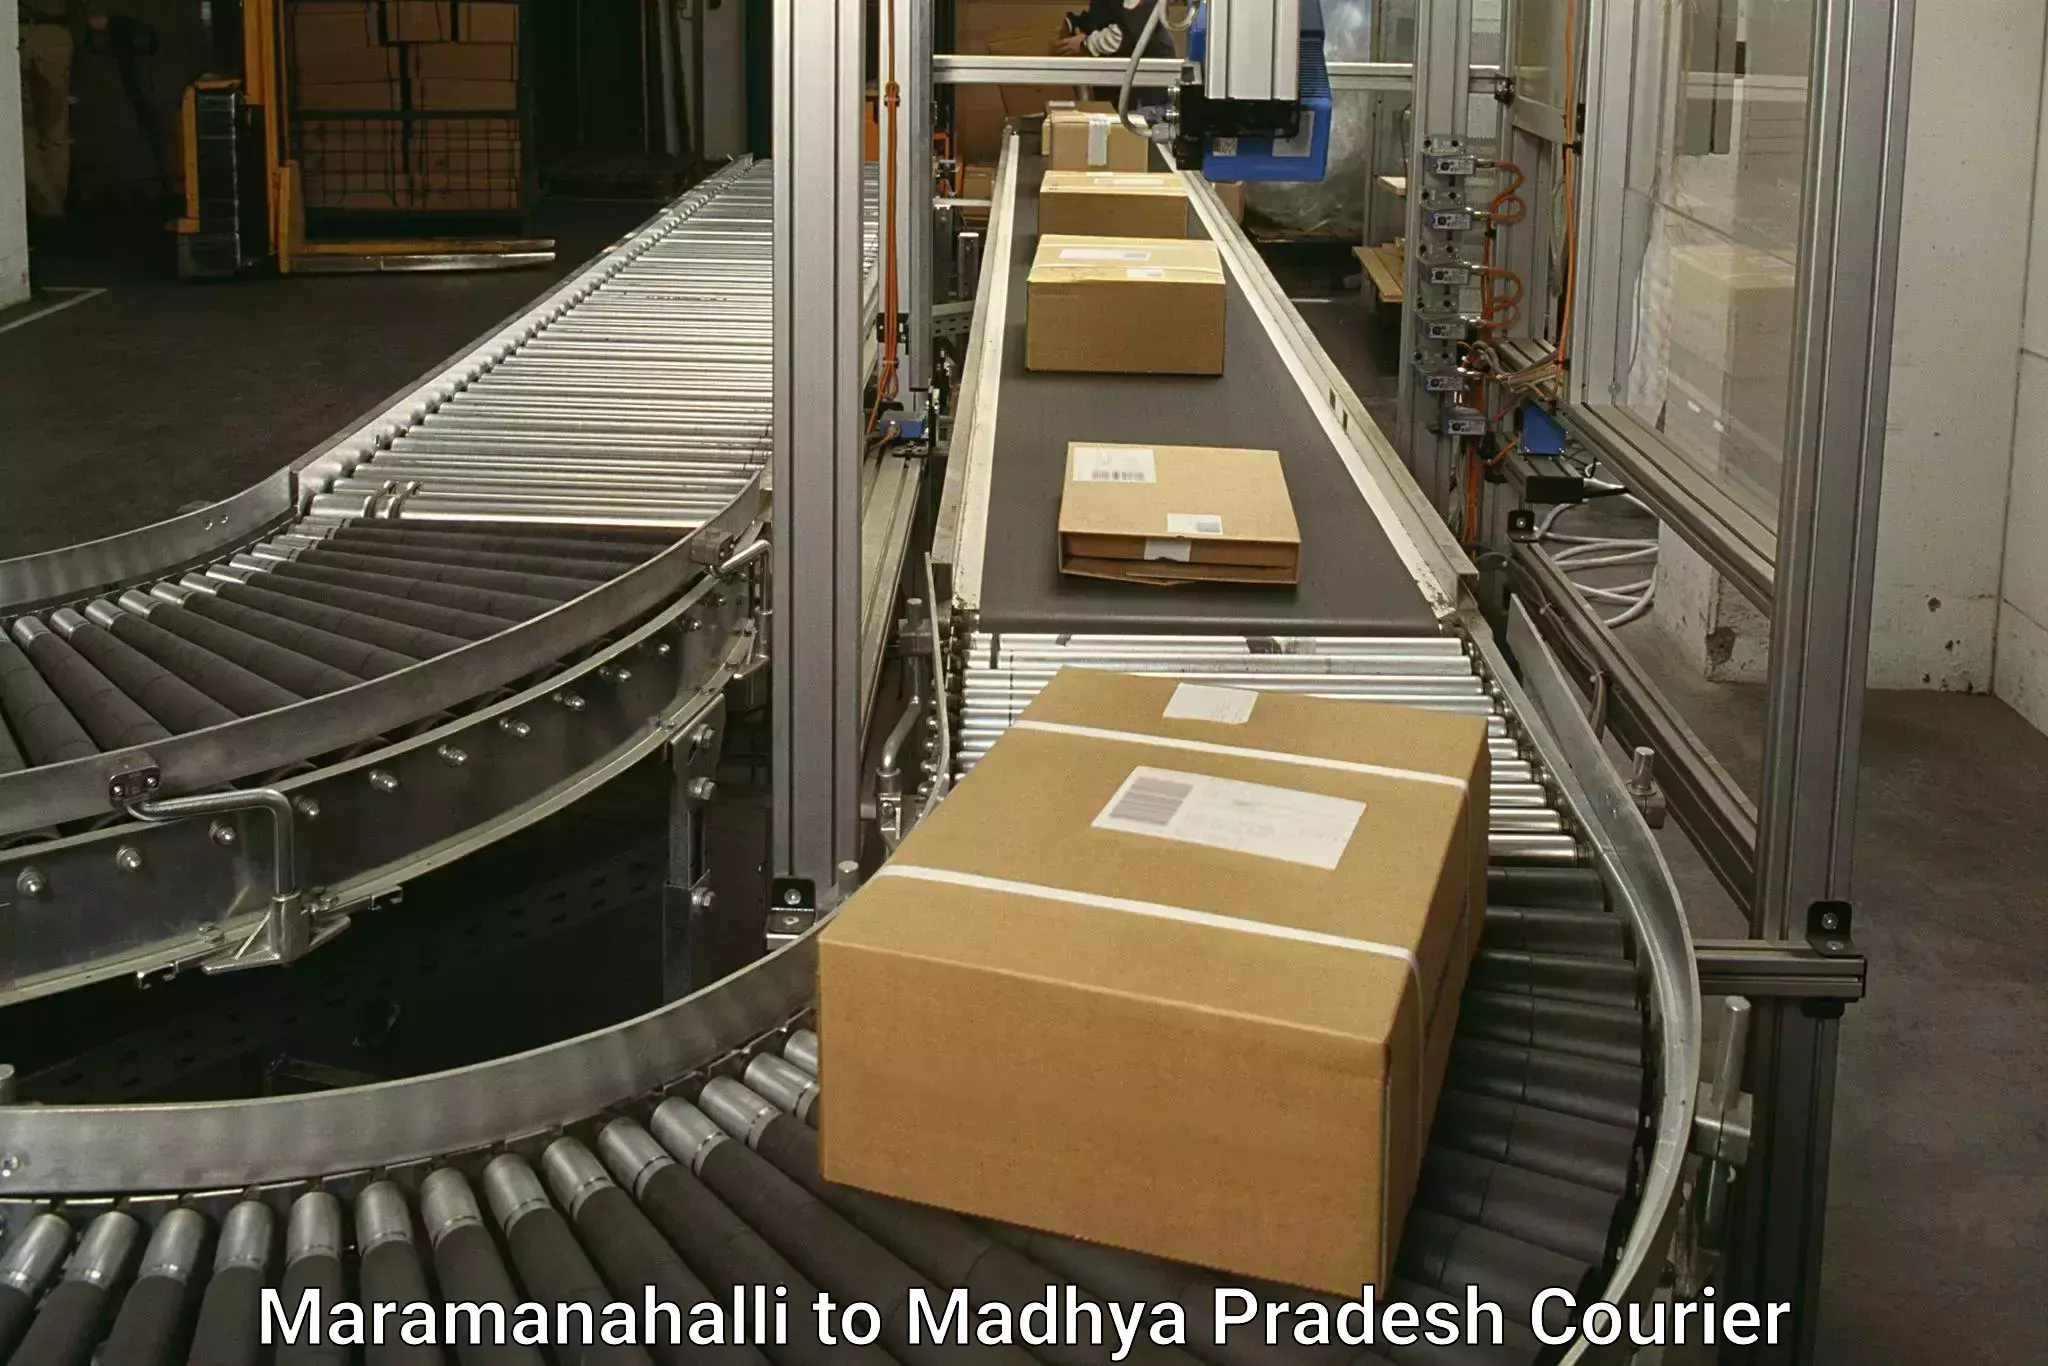 Global courier networks Maramanahalli to Madhya Pradesh